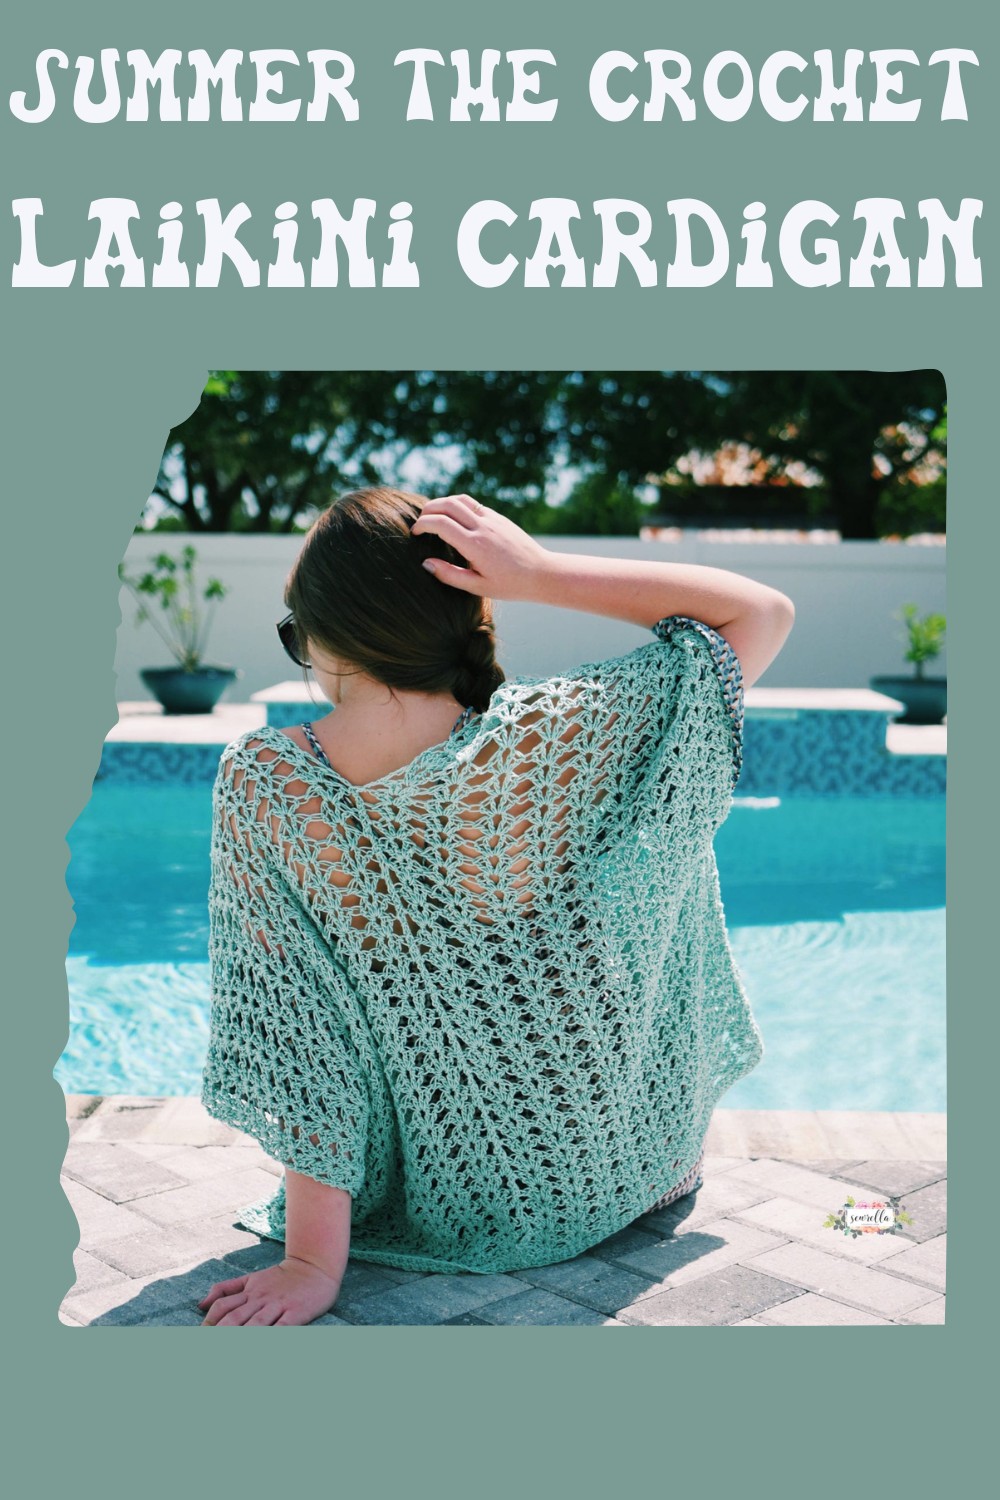 Summer The Crochet Laikini Cardigan